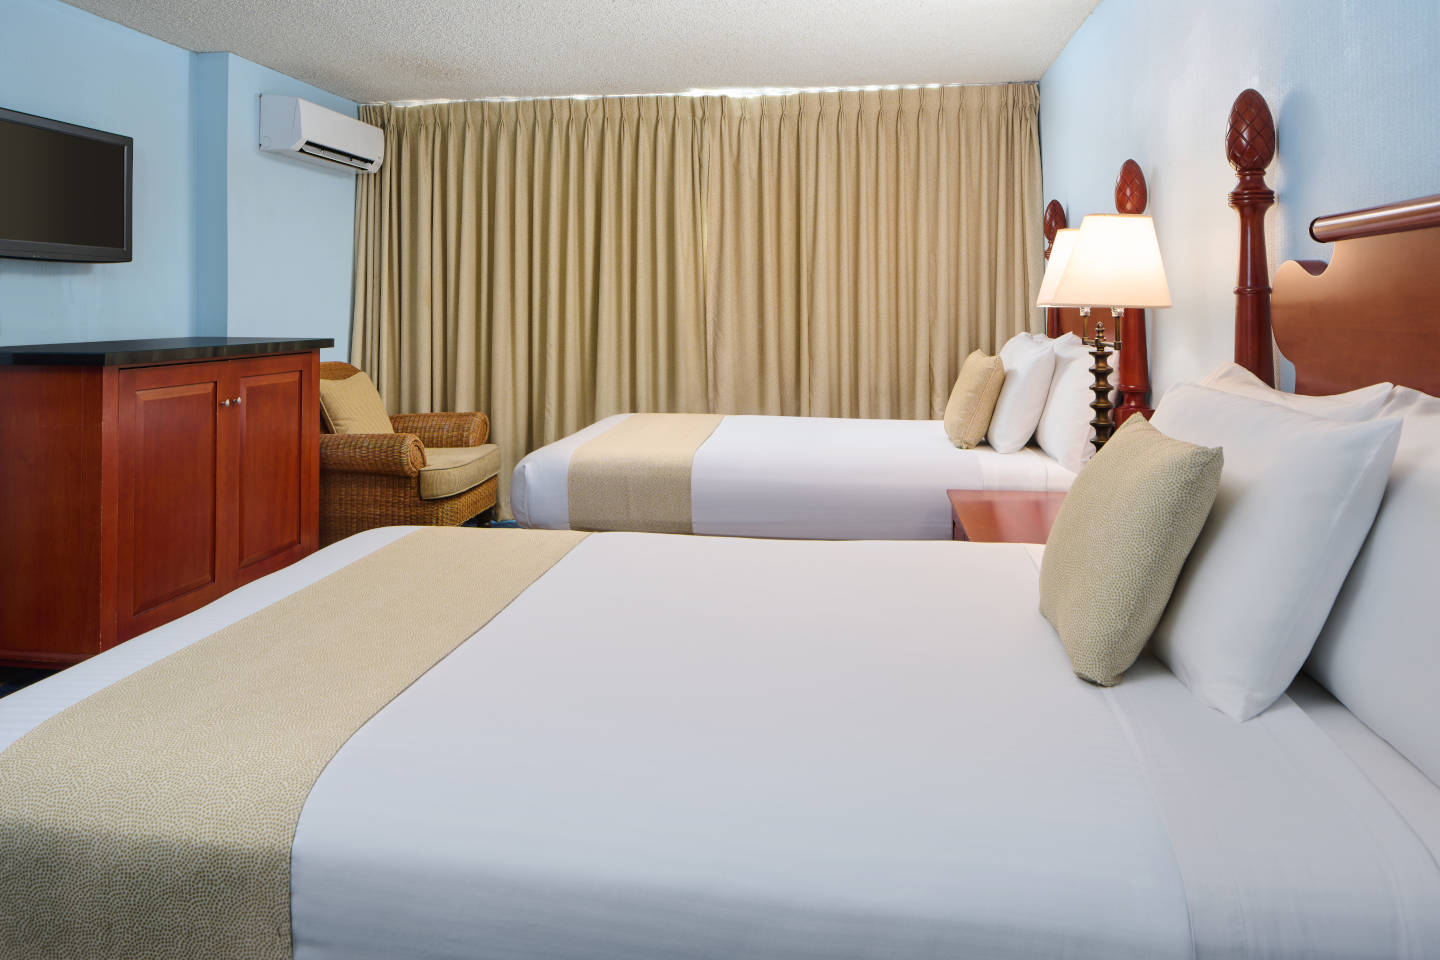 Hotel Room Amenities